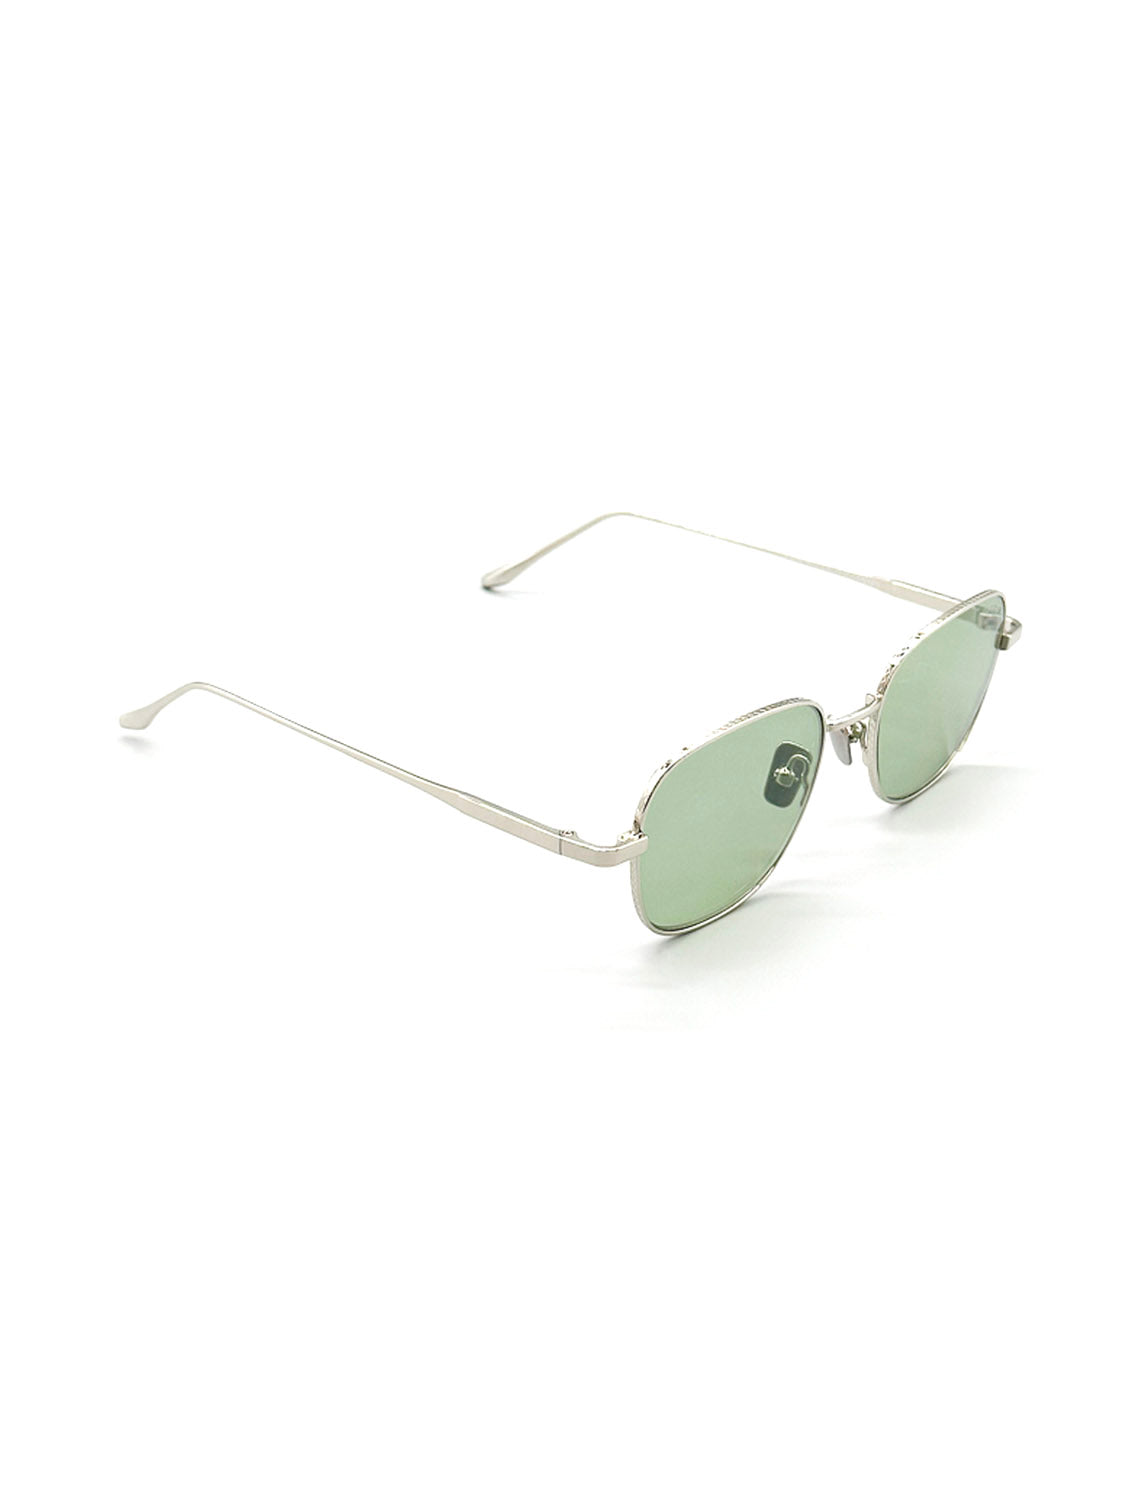 M425LG ID Polarized Sunglasses